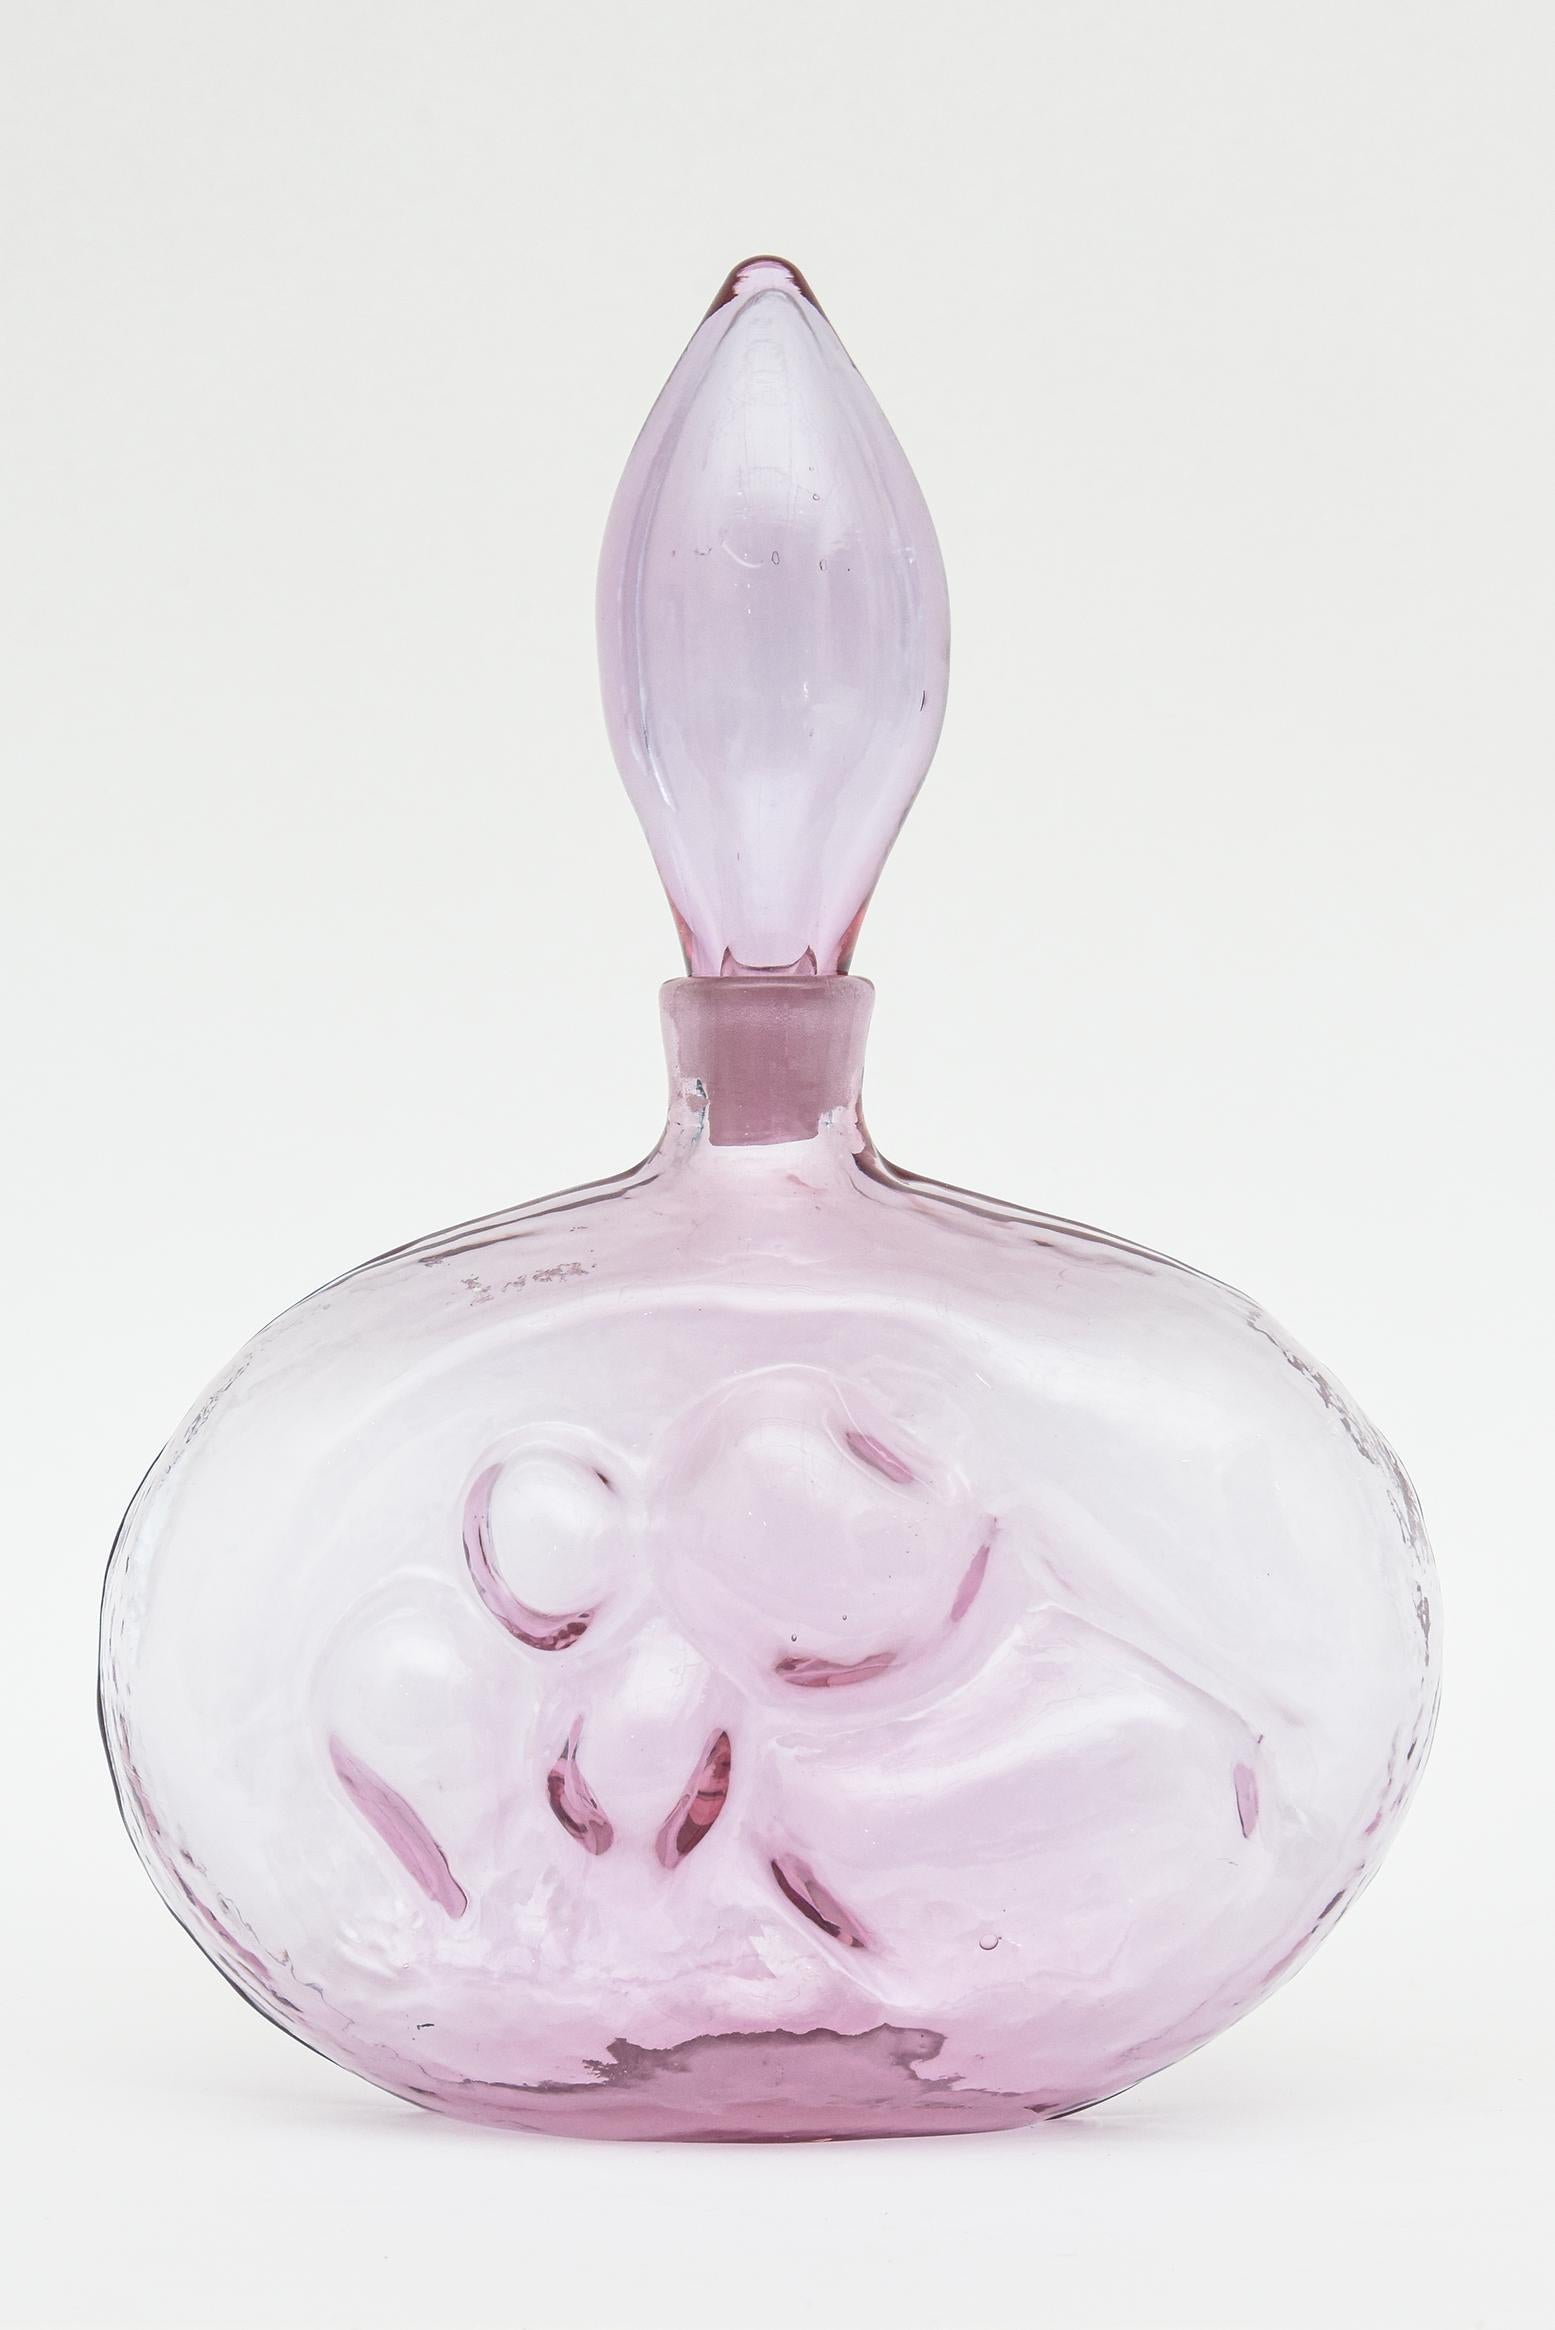 Glass Vintage Blenko Light Purple Decanter Bottle With Stopper and Molded Design For Sale